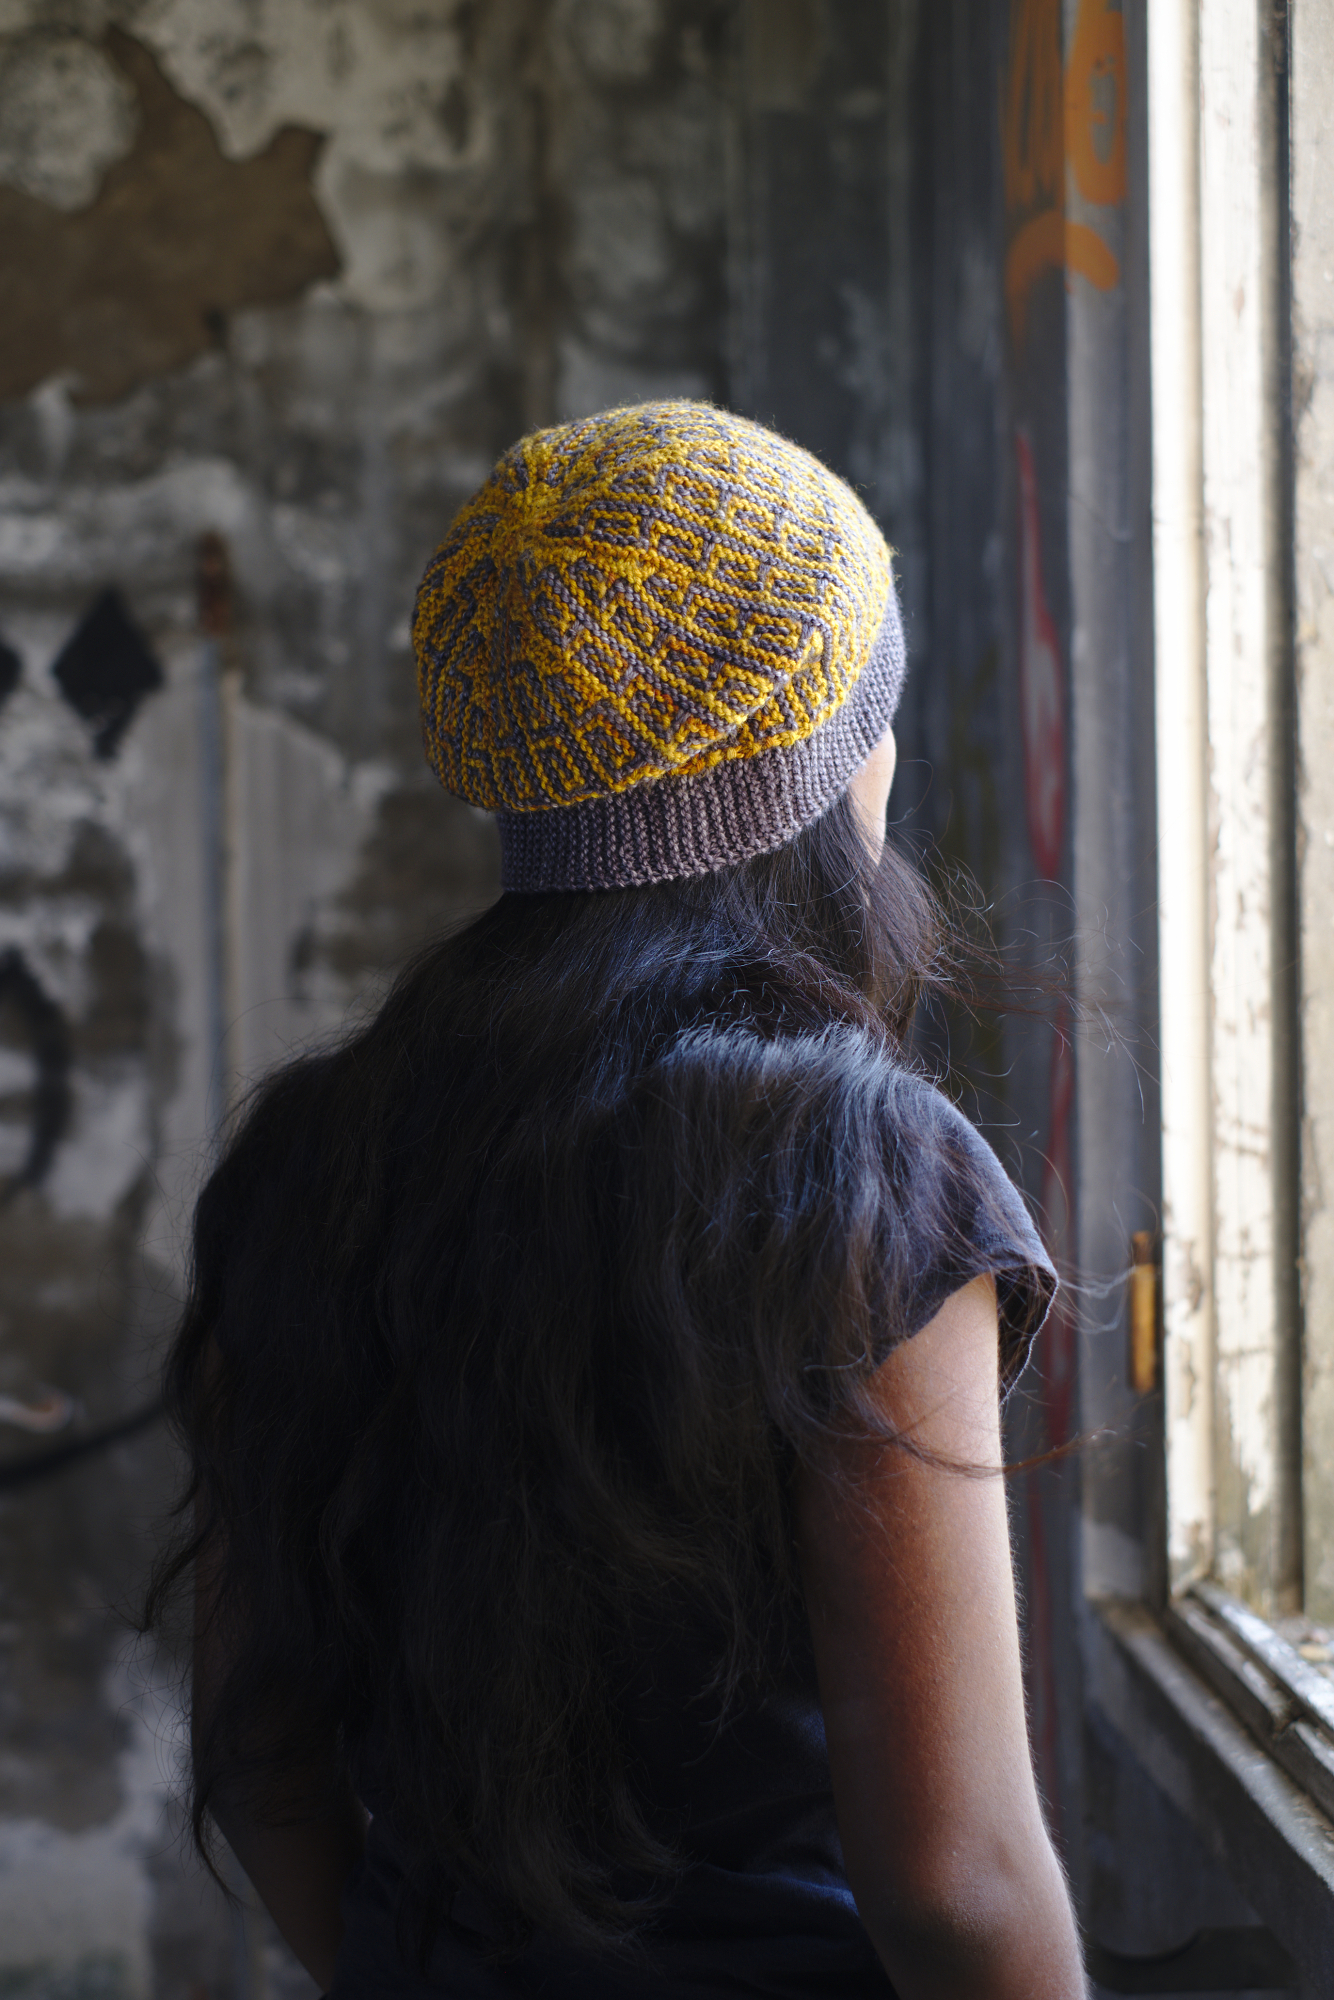 Revolutions sideways knit mosaic hat knitting pattern for dk weight yarn